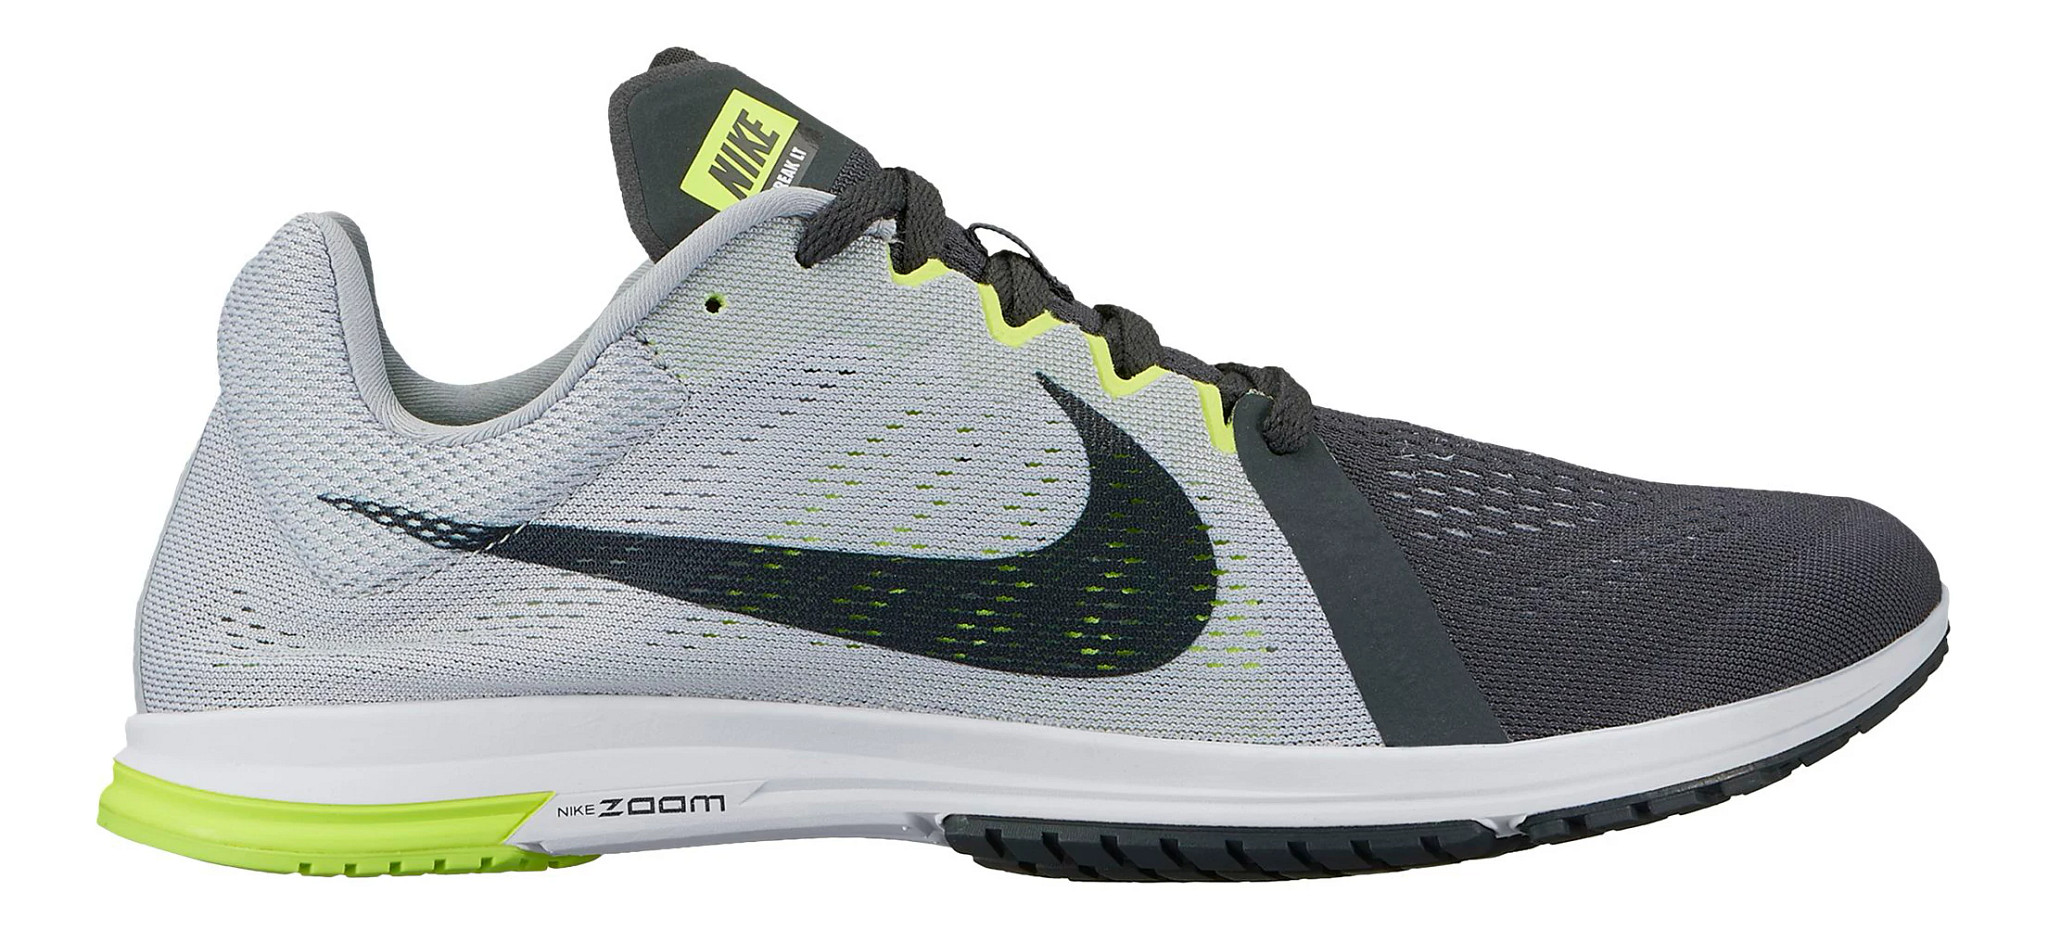 Nike Zoom Streak 3 Racing Shoe